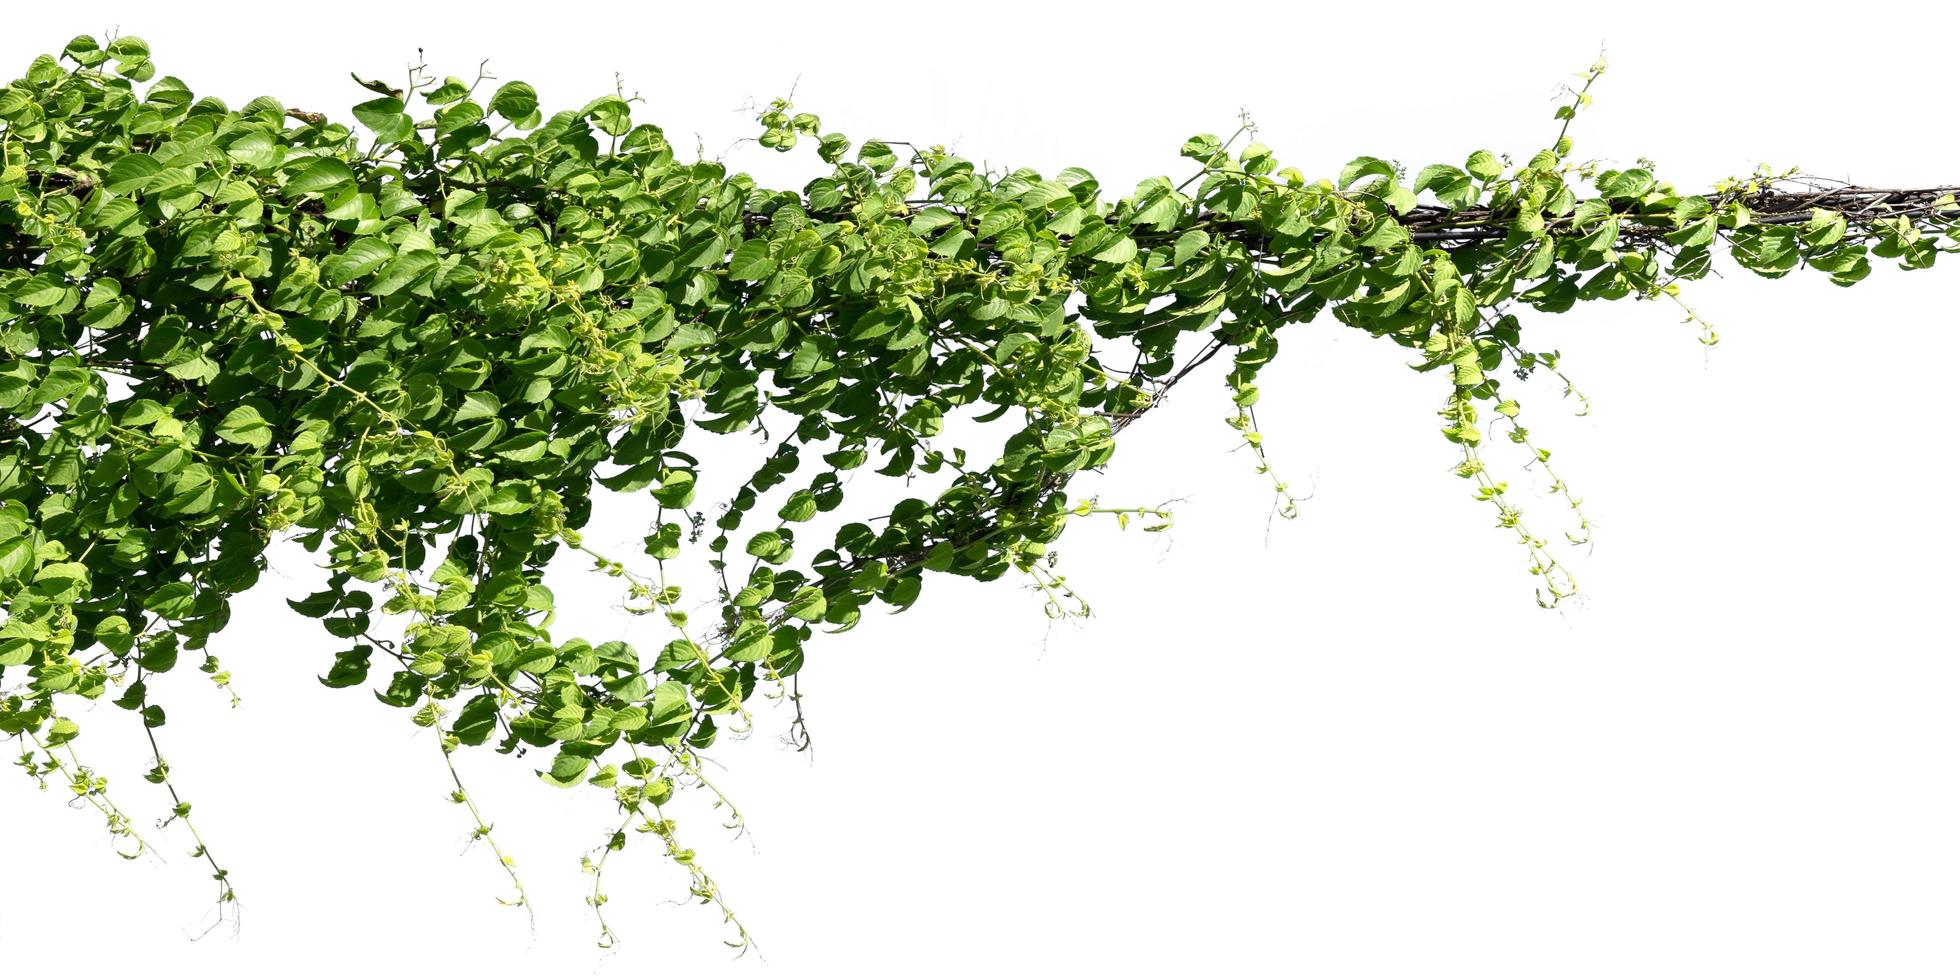 murgröna växt isolera på vit bakgrund foto